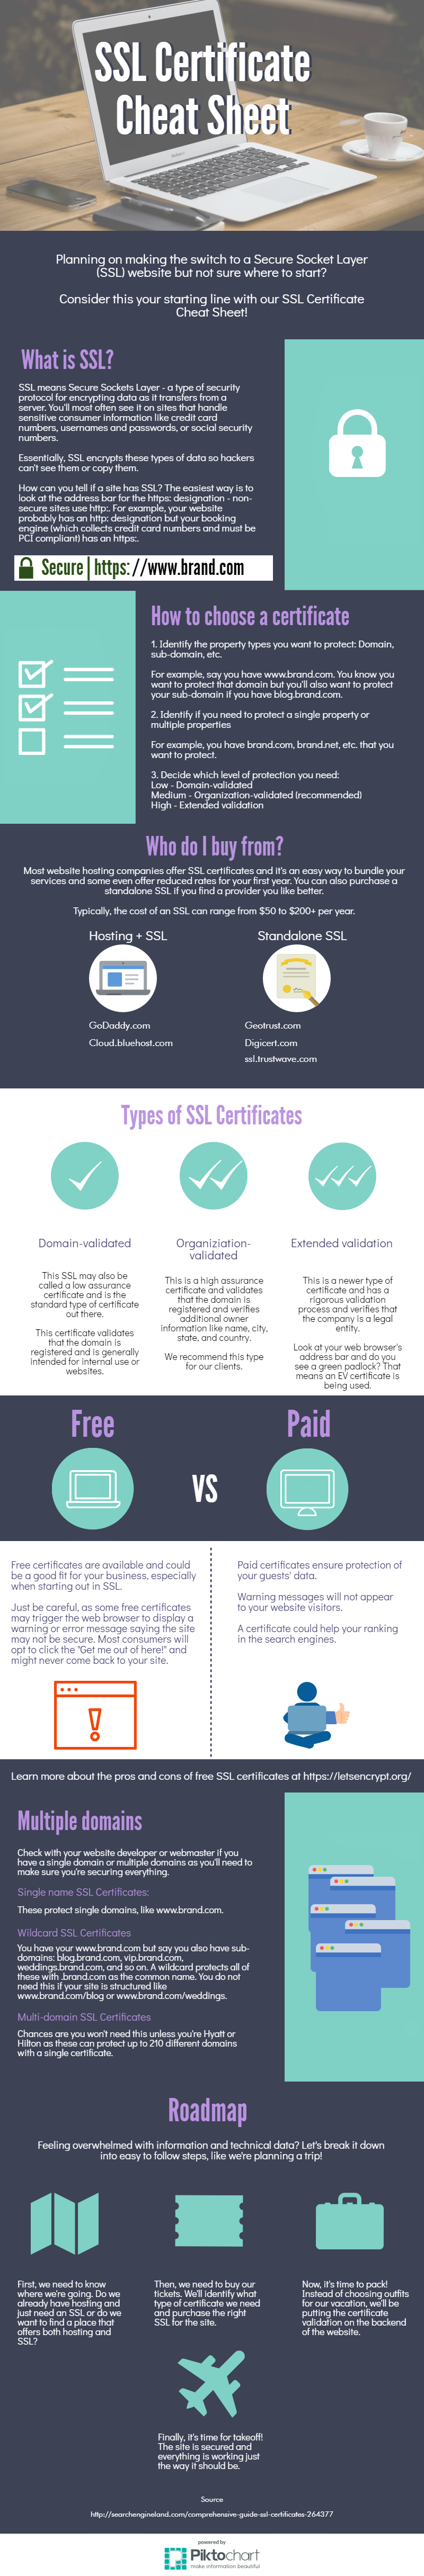 SSL Certificate infographic